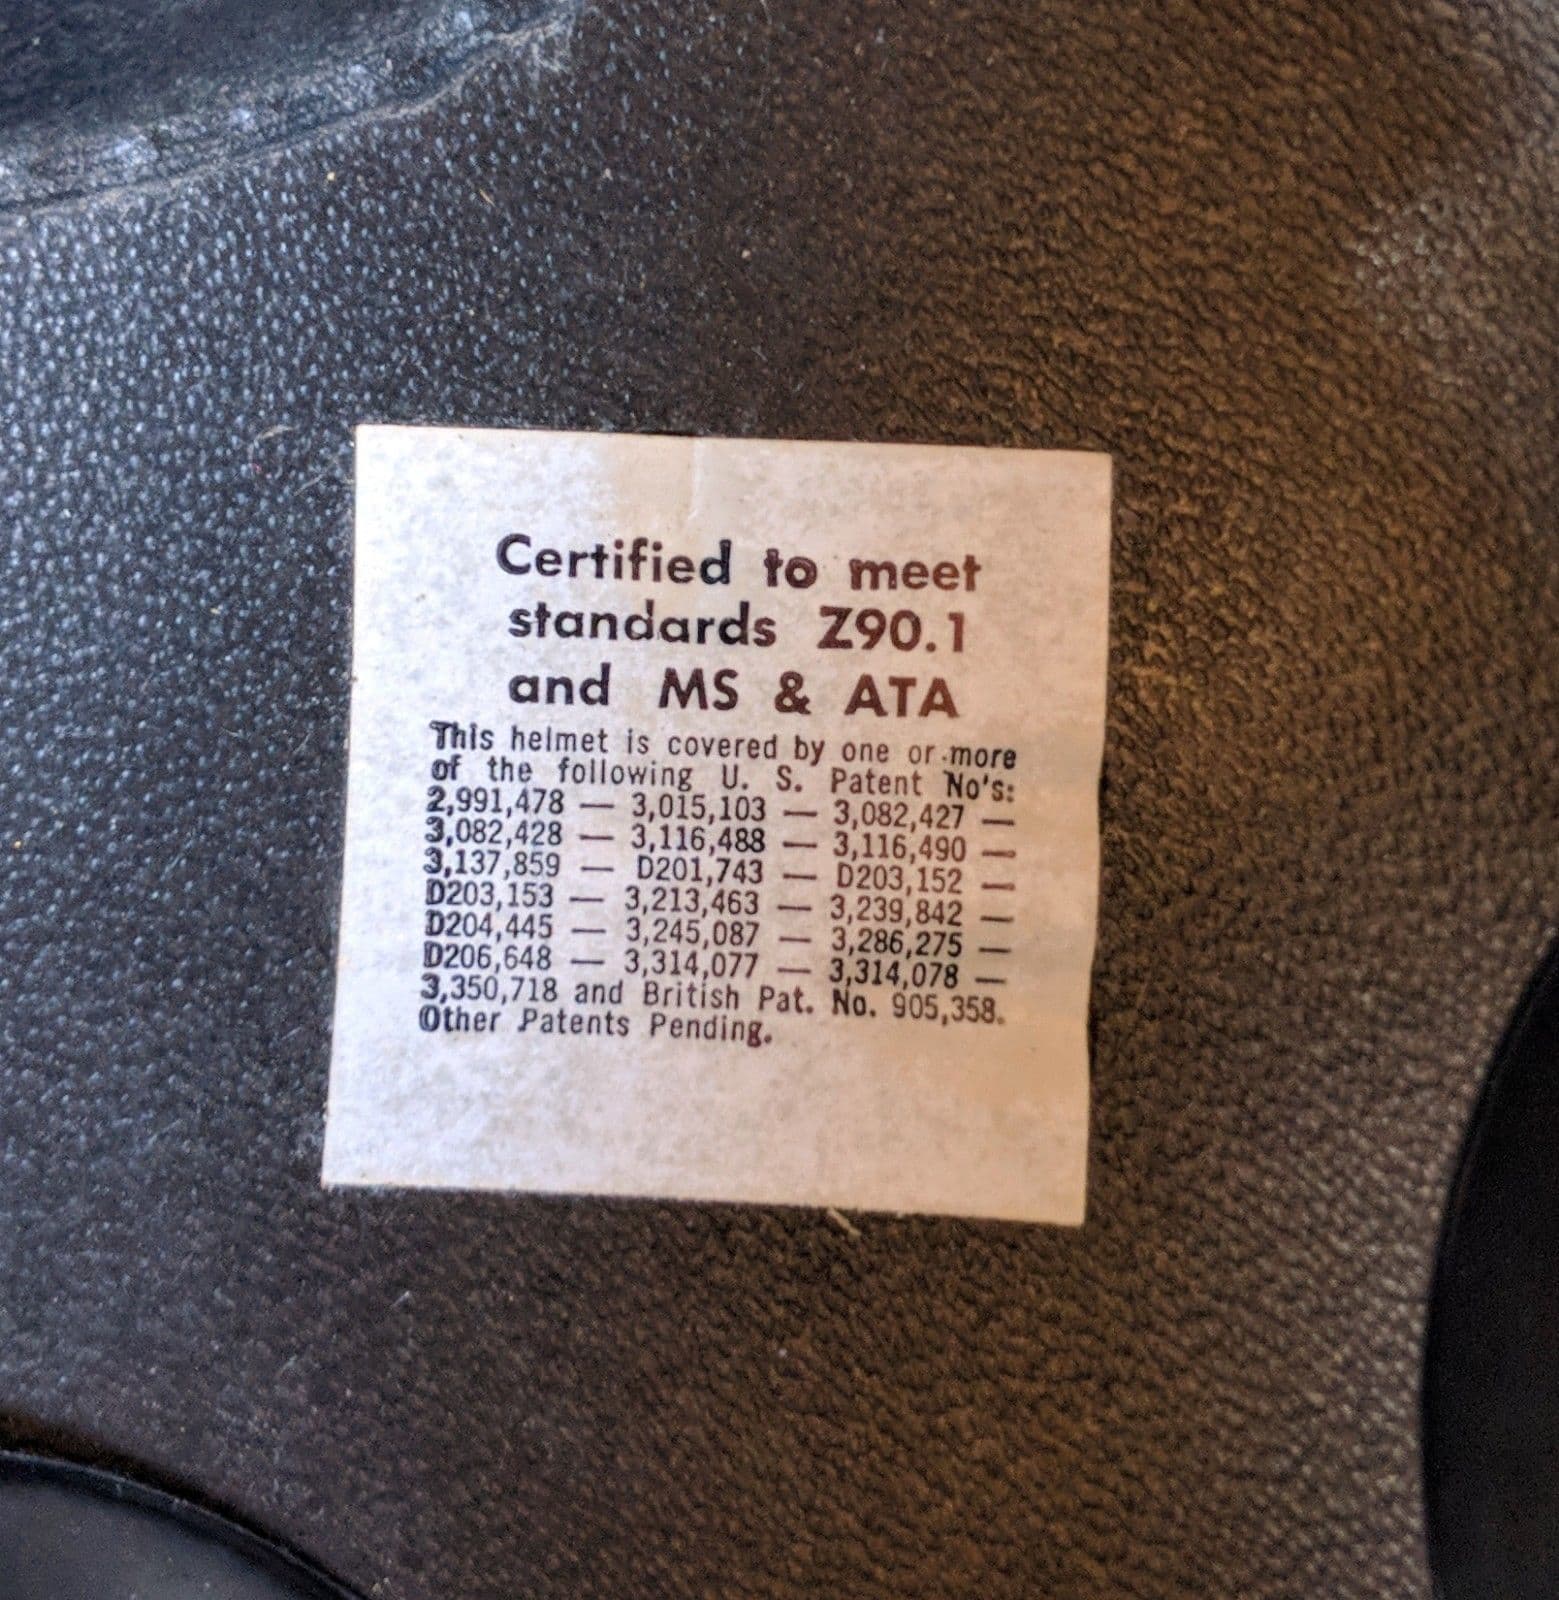 7534 Sears Buco Helmet